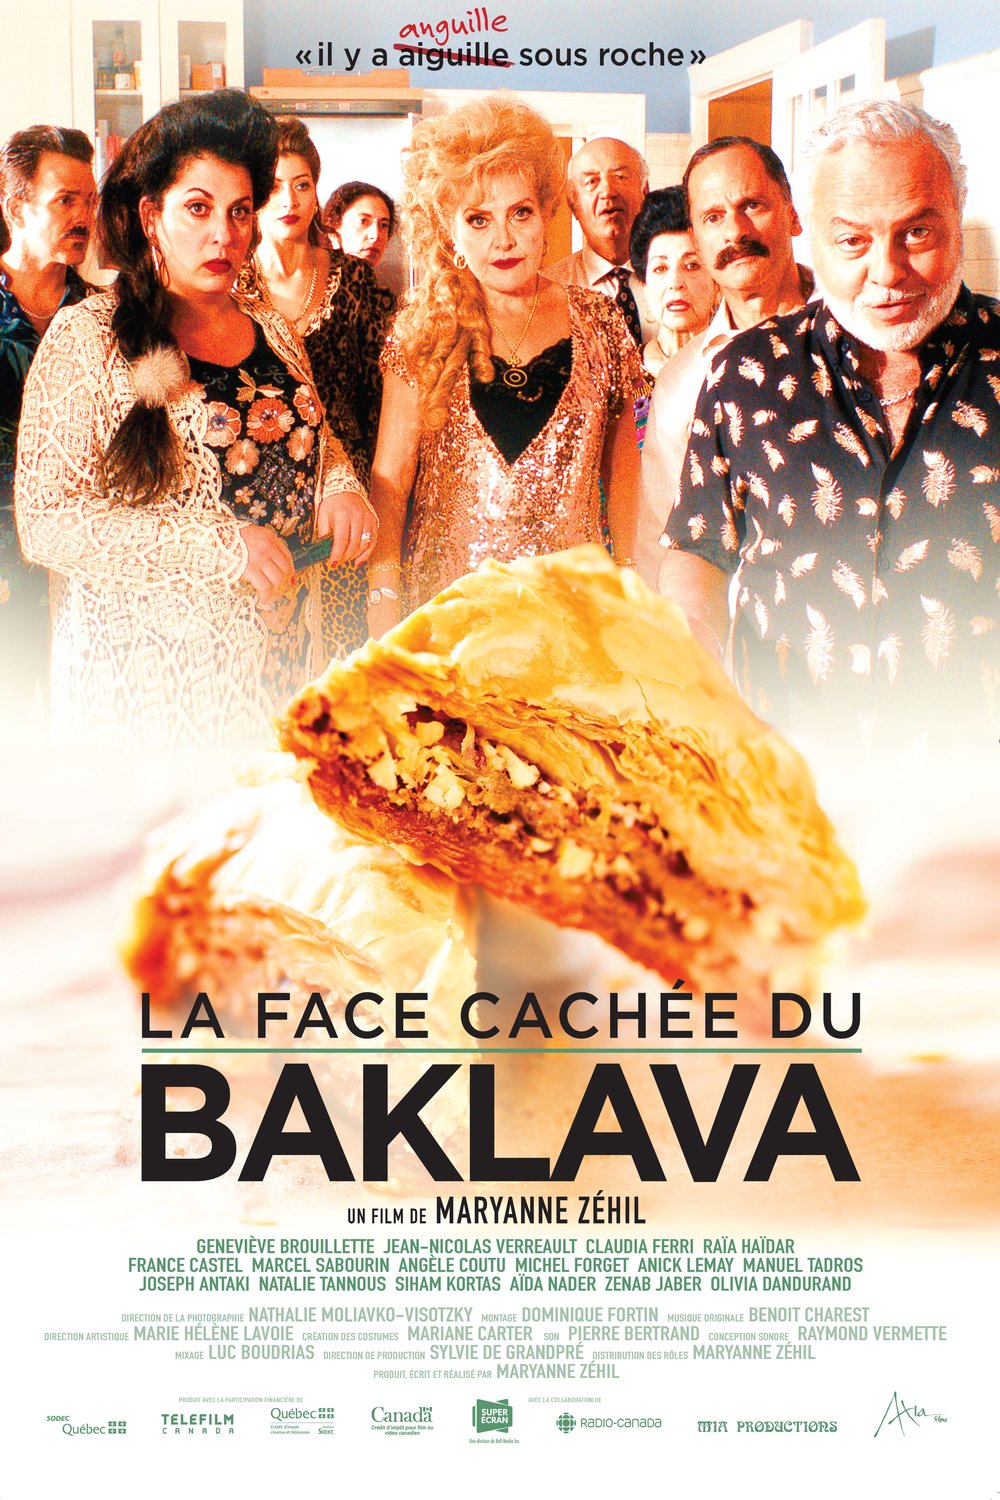 Poster of the movie La face cachée du baklava